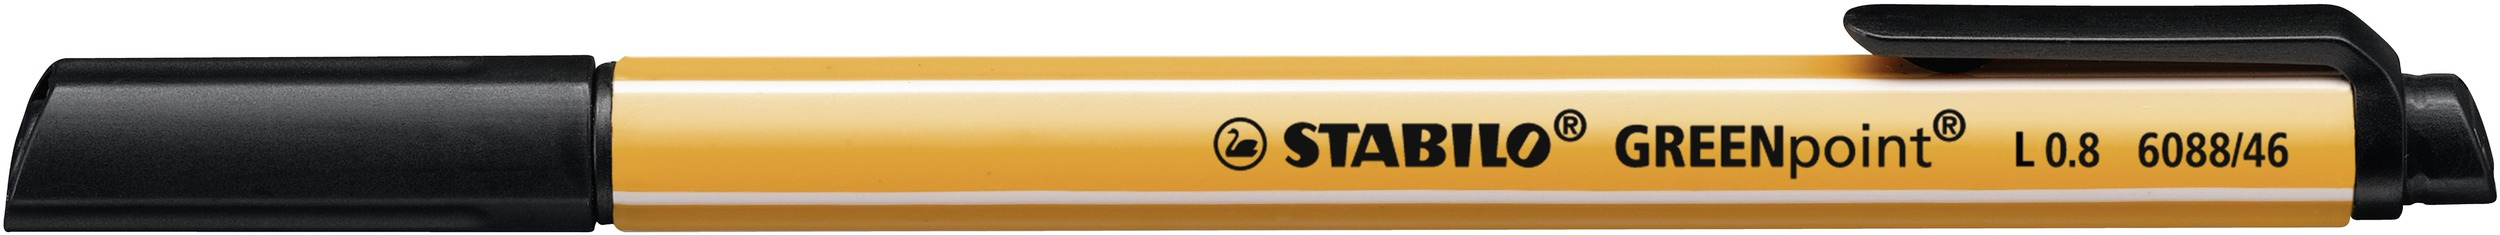 stabilo Stabilo Greenpoint Co2 Neutral Fibre Tip Sign Pen 0.8mm Line Black (pack 10) 6088/46 6088/46 - AD01